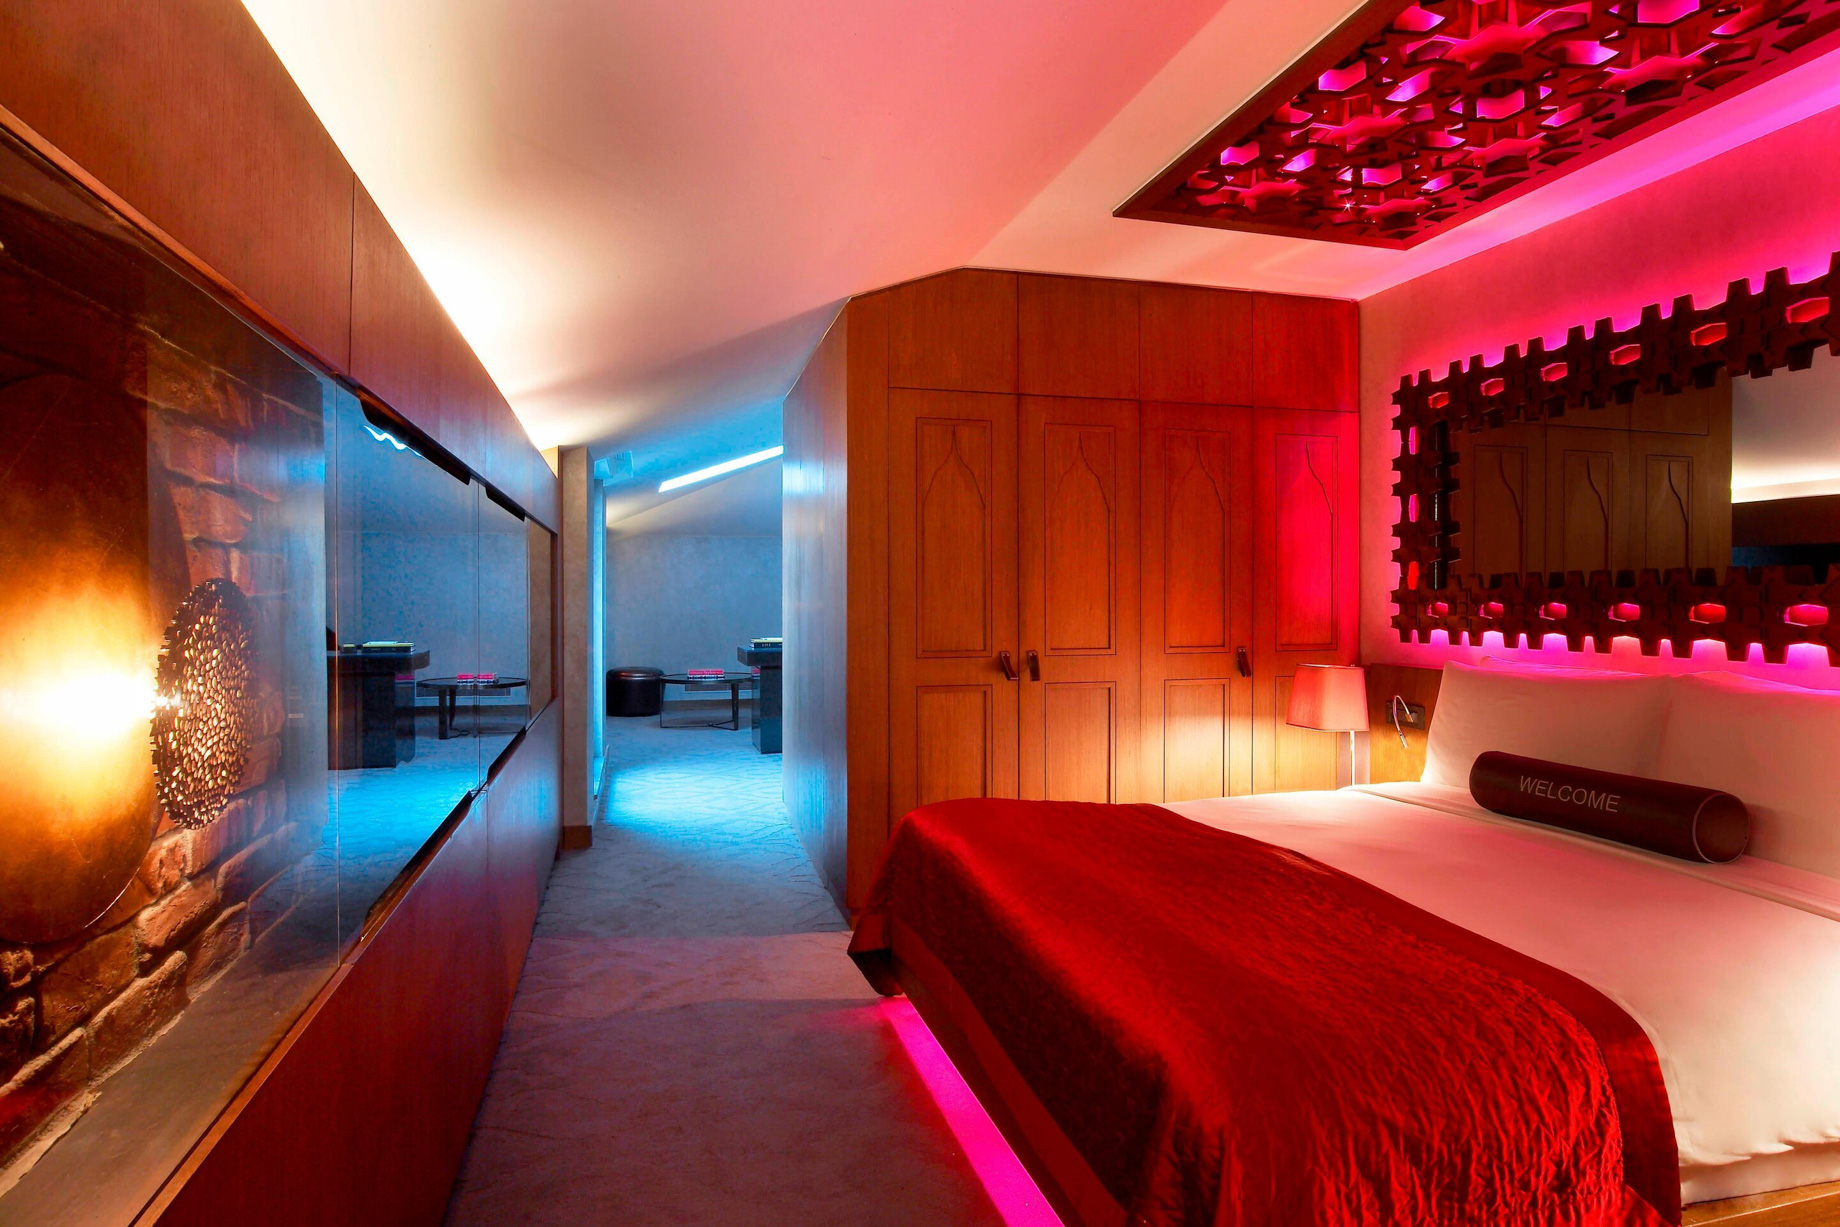 W Istanbul Hotel – Istanbul, Turkey – Marvelous Suite Bedroom